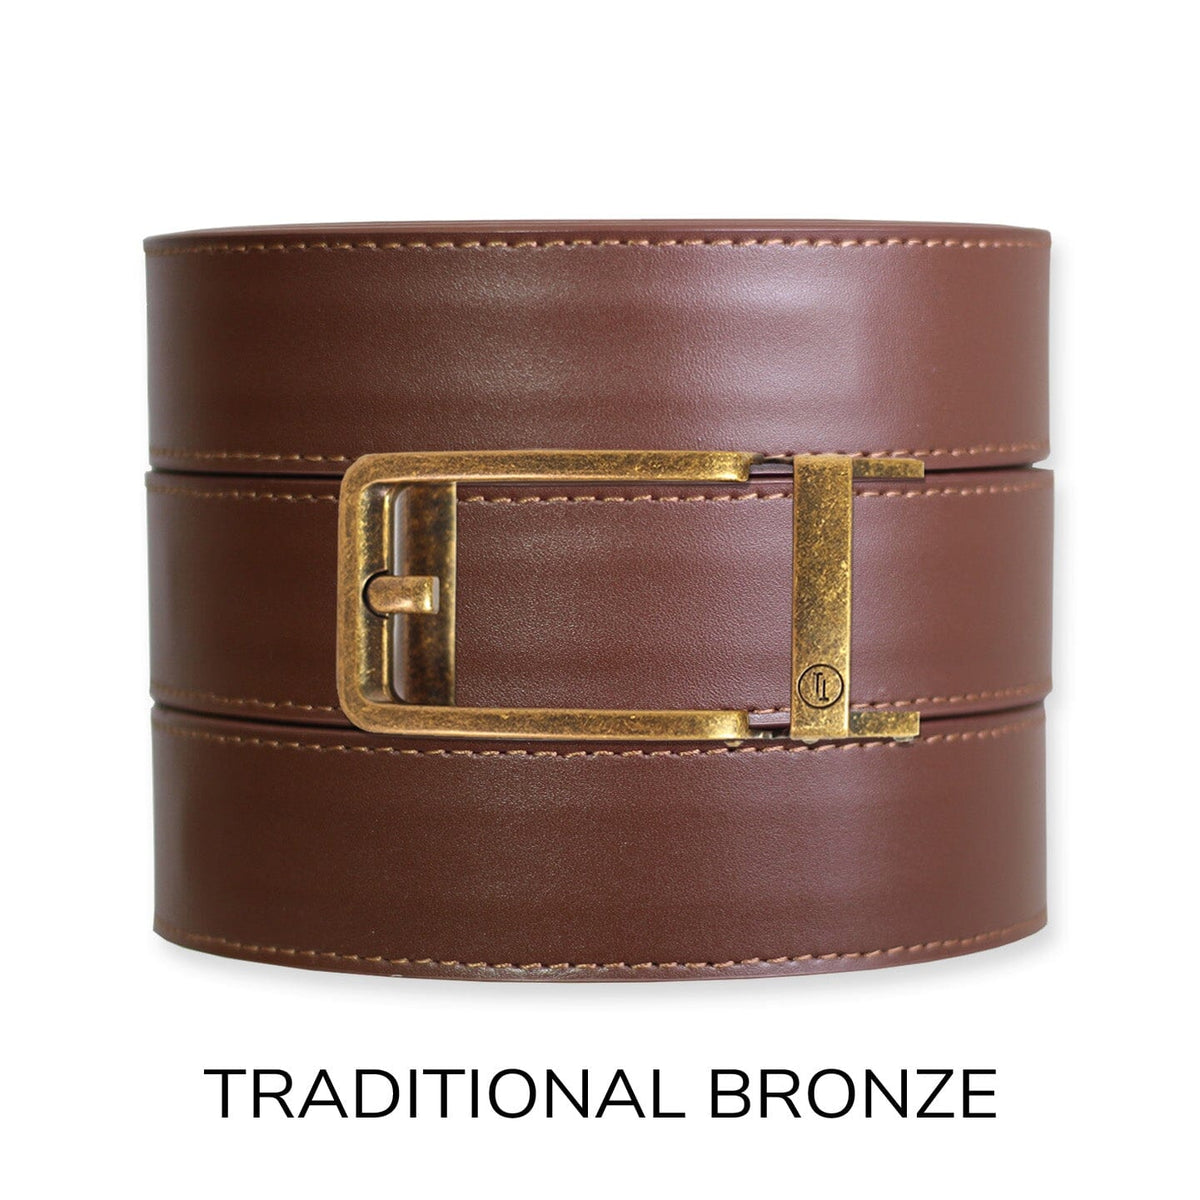 Men's Braided Belt in Chestnut